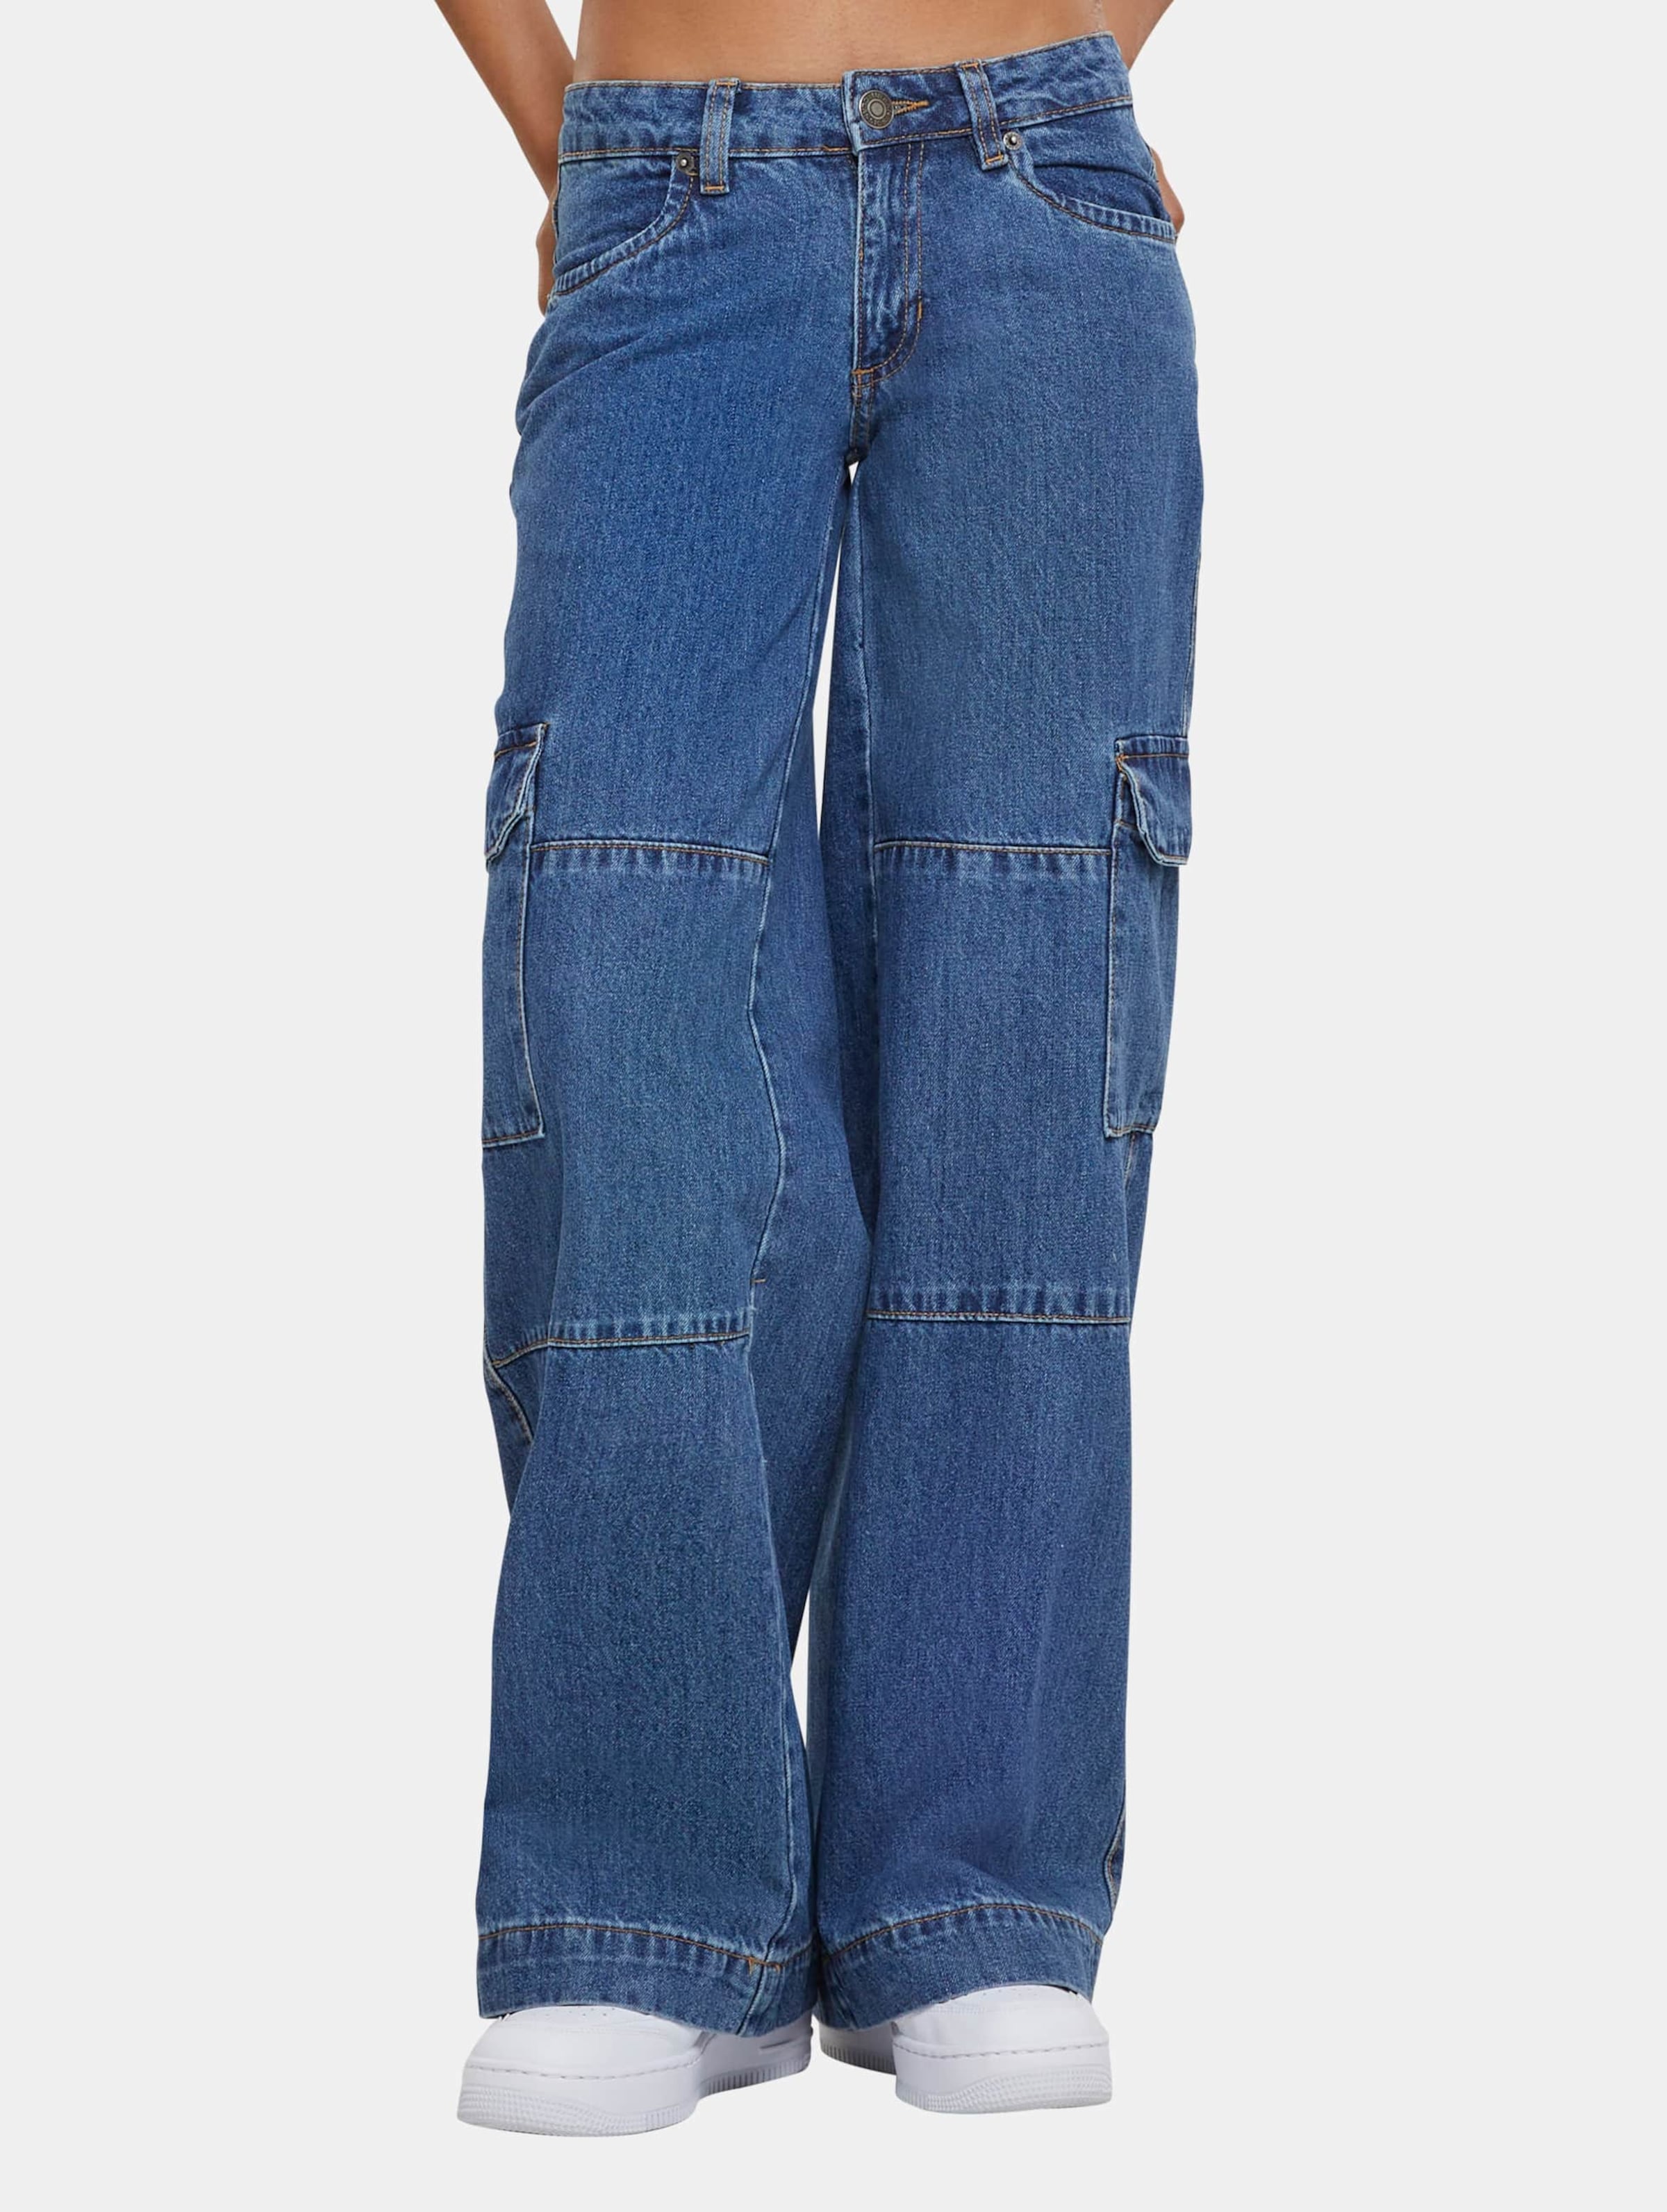 Urban Classics - Low Waist Denim Cargo trousers - Taille, 34 inch - Donkerblauw